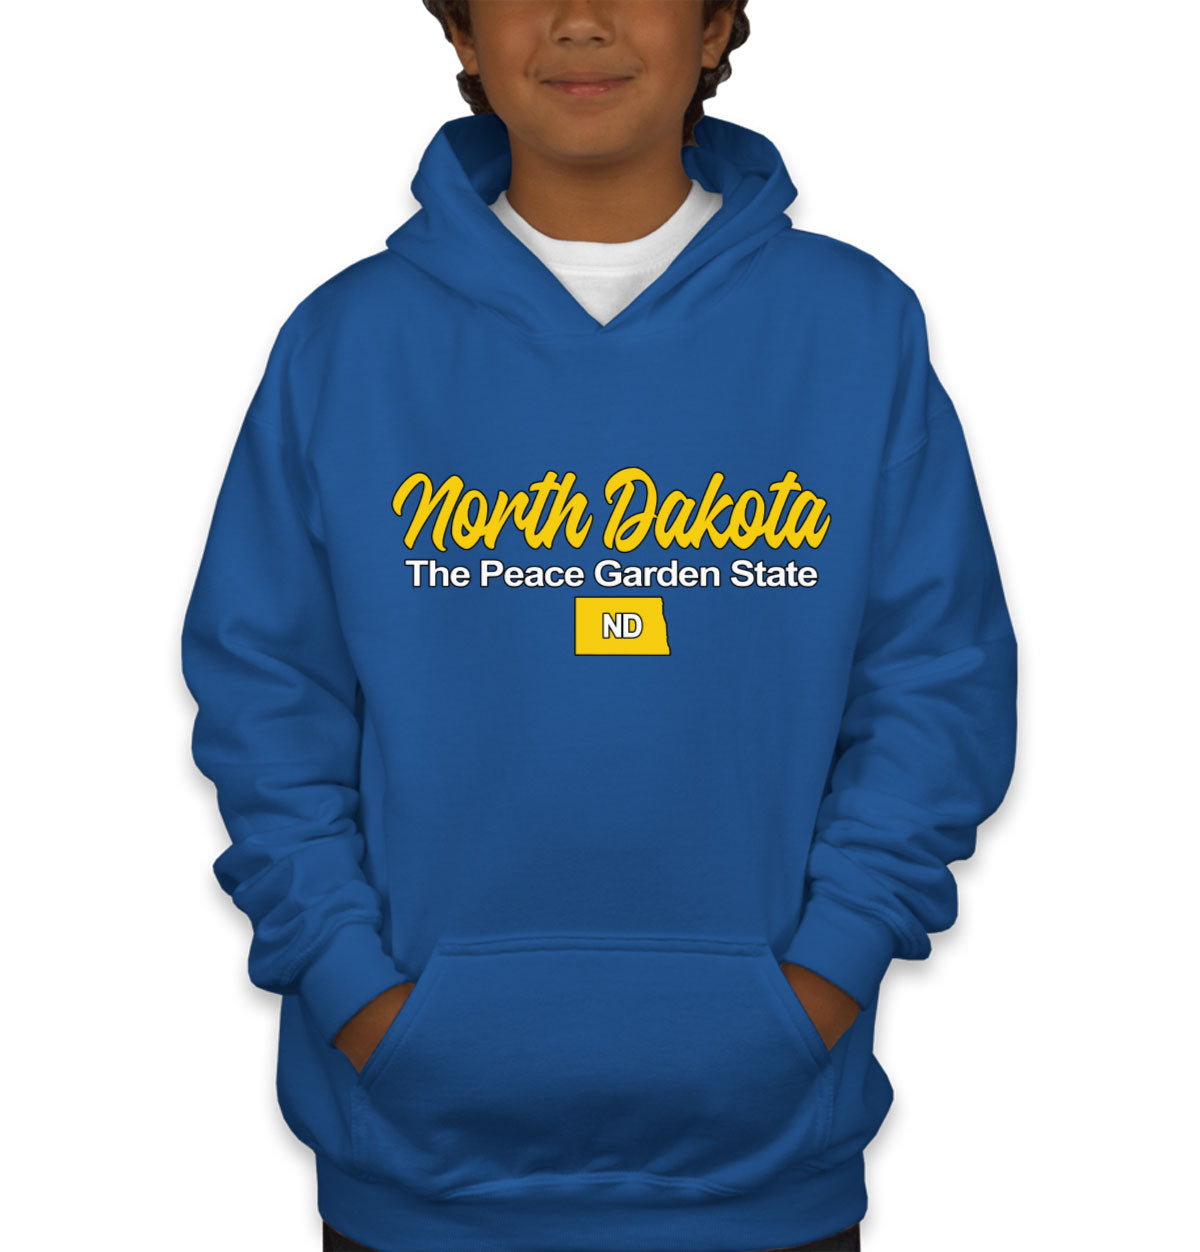 North Dakota The Peace Garden State Youth Hoodie